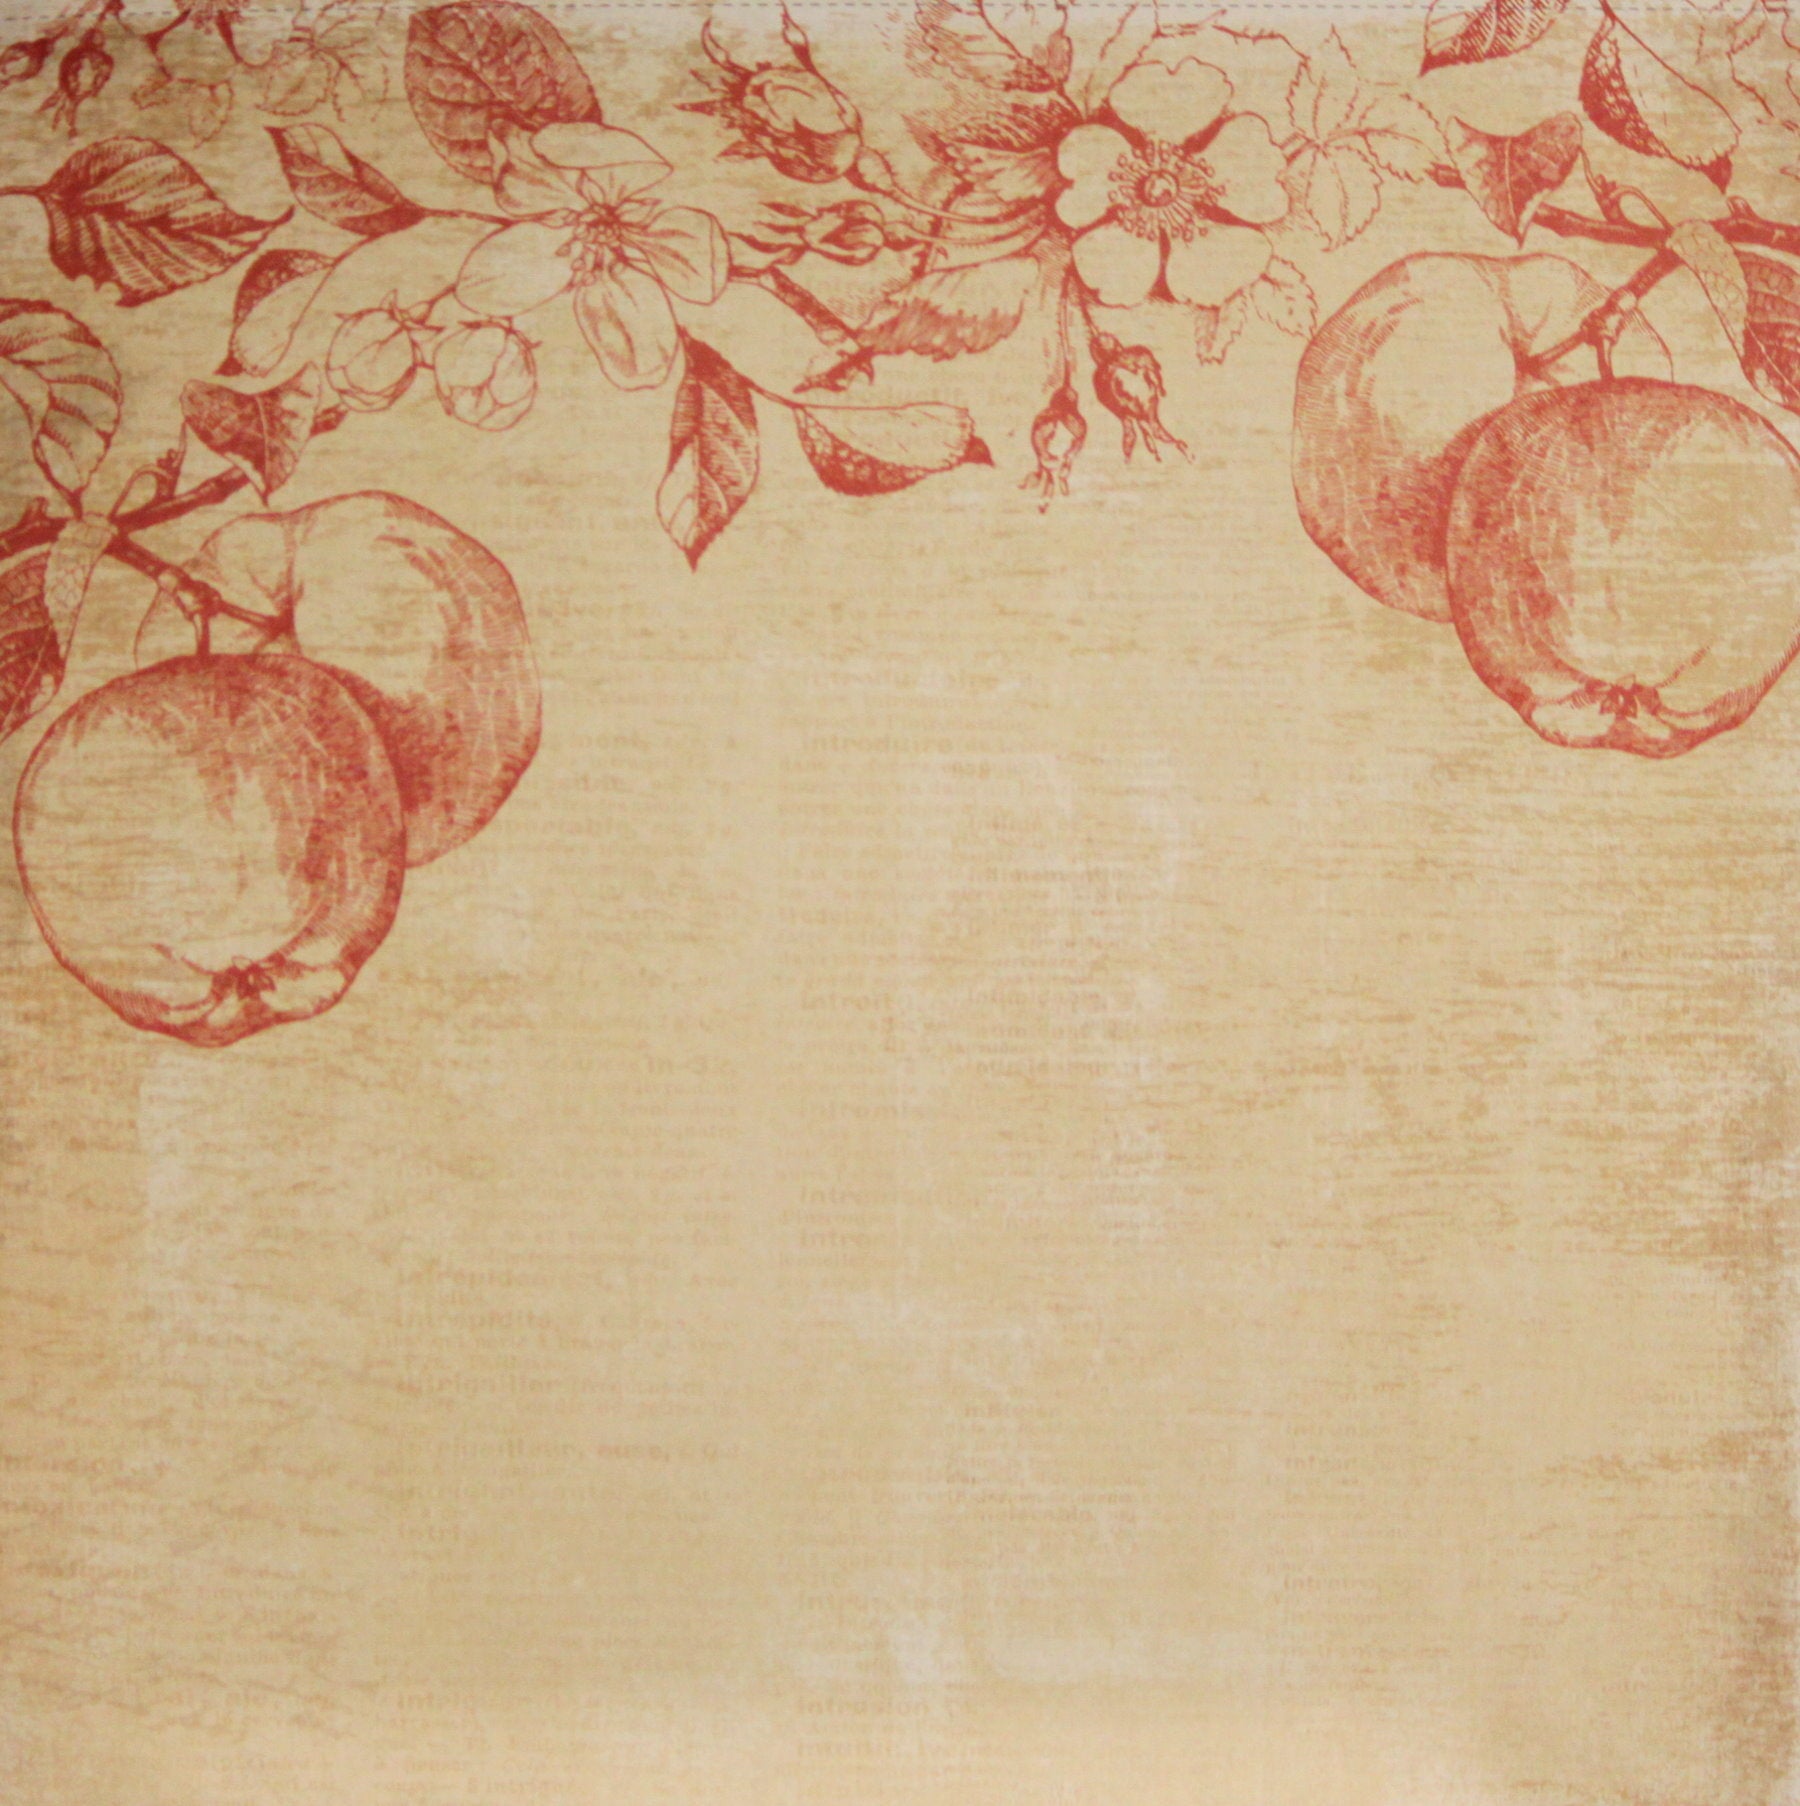 Colorbok Grateful Harvest Apple Tree 12 x 12 Flat Scrapbook Paper